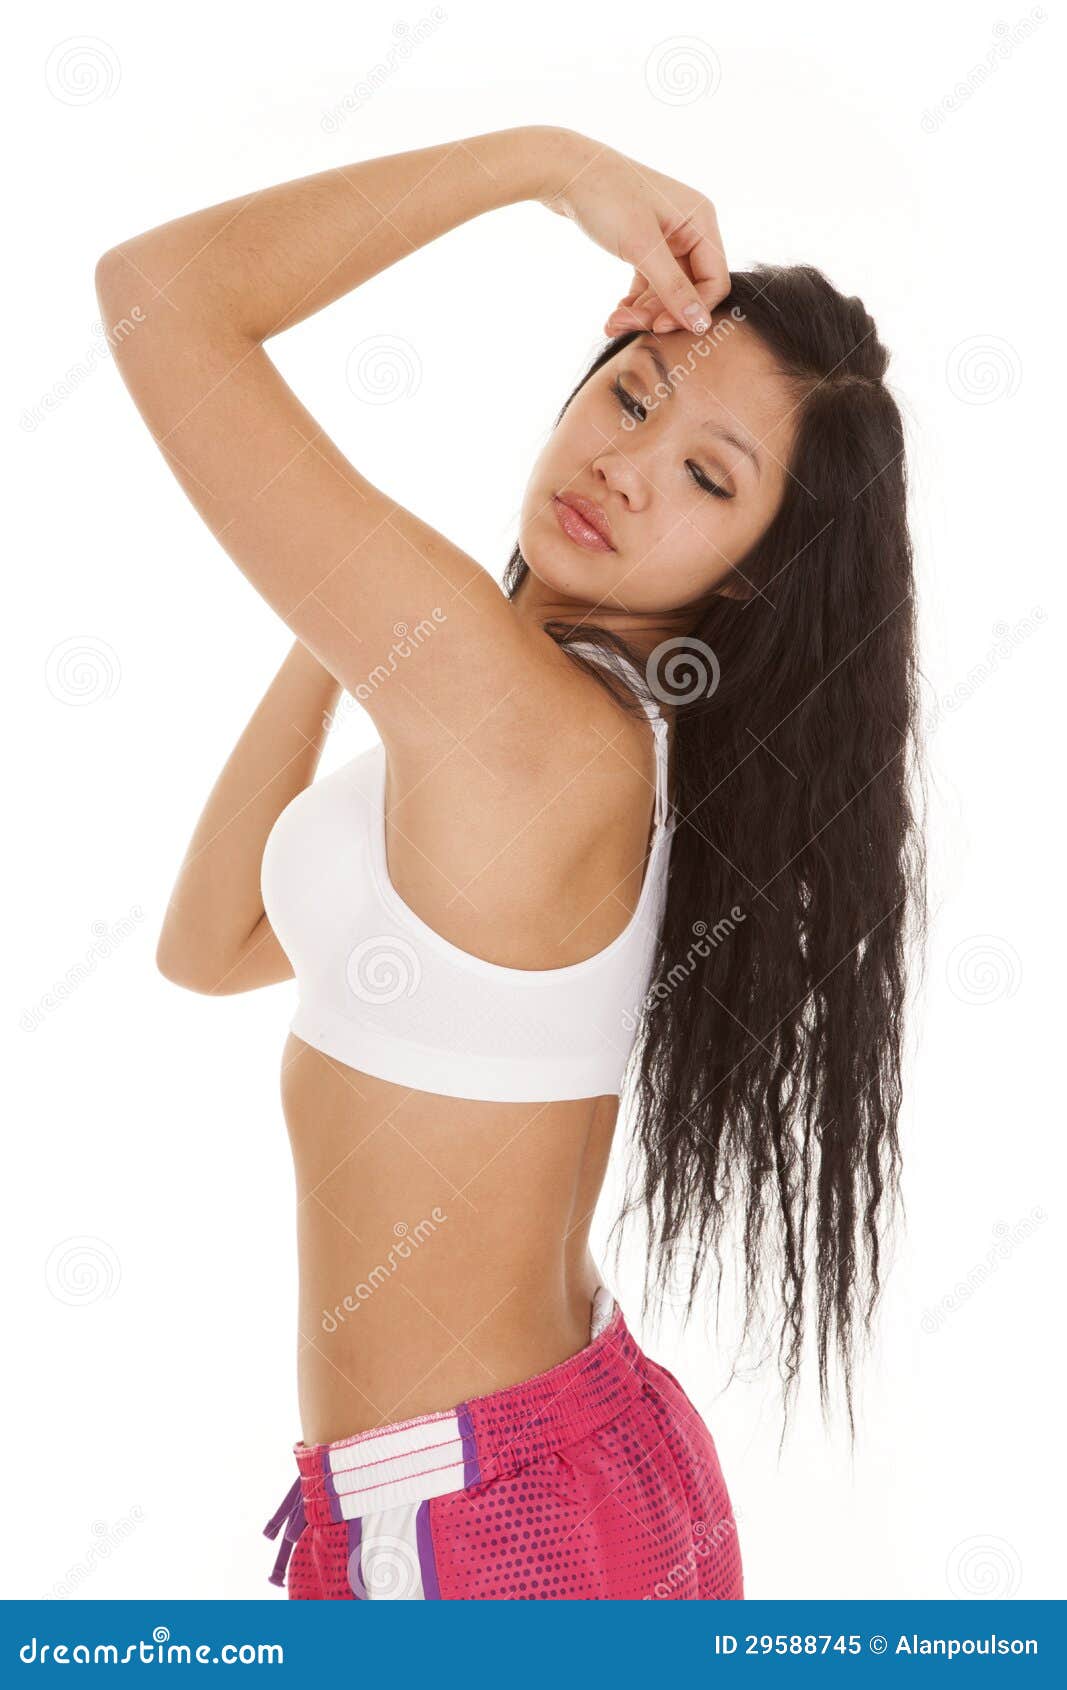 asian teen showing off body